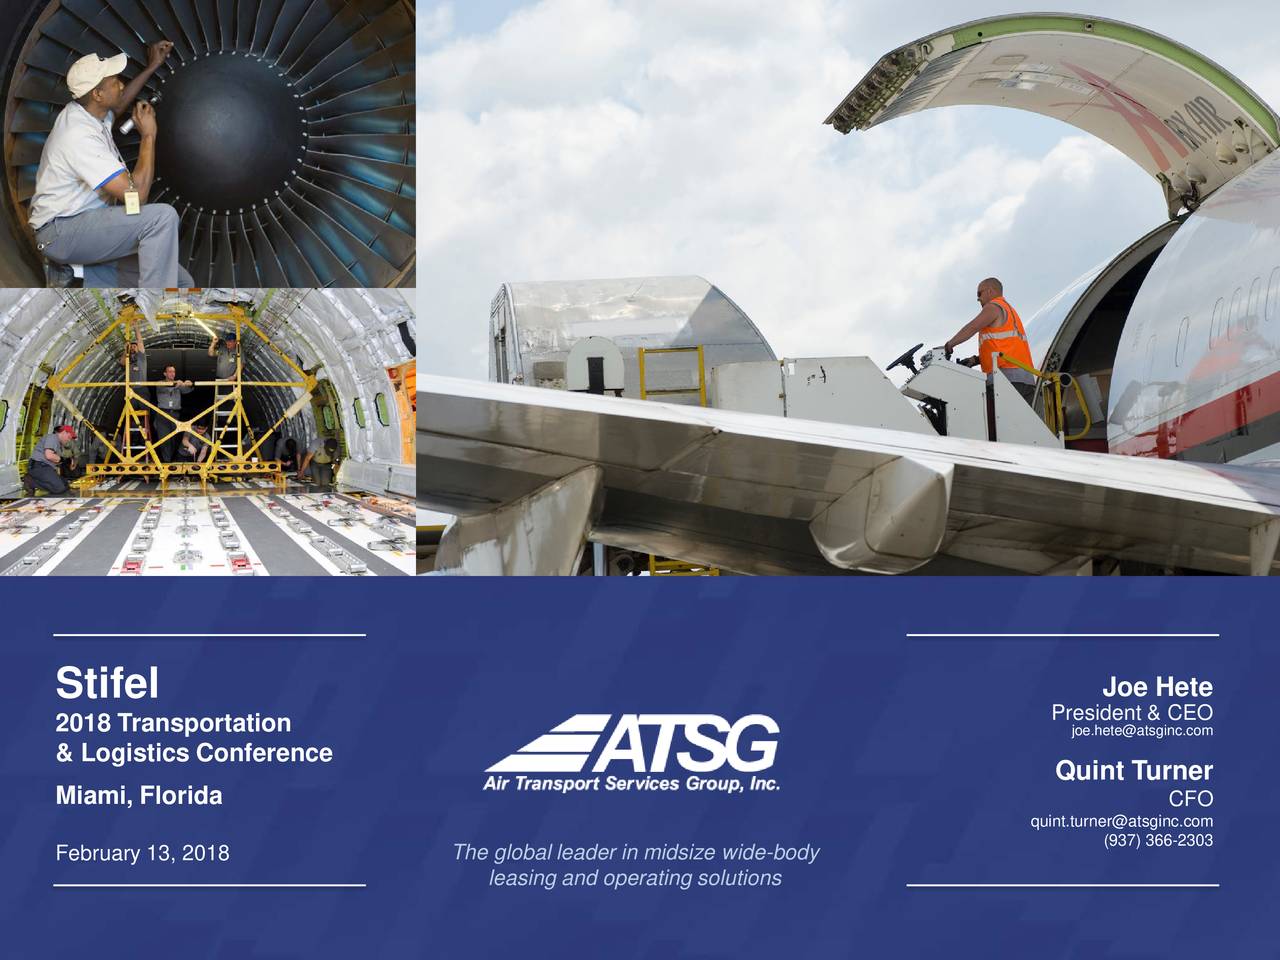 Air Transport Services (ATSG) Presents At Stifel 2018 Transportation